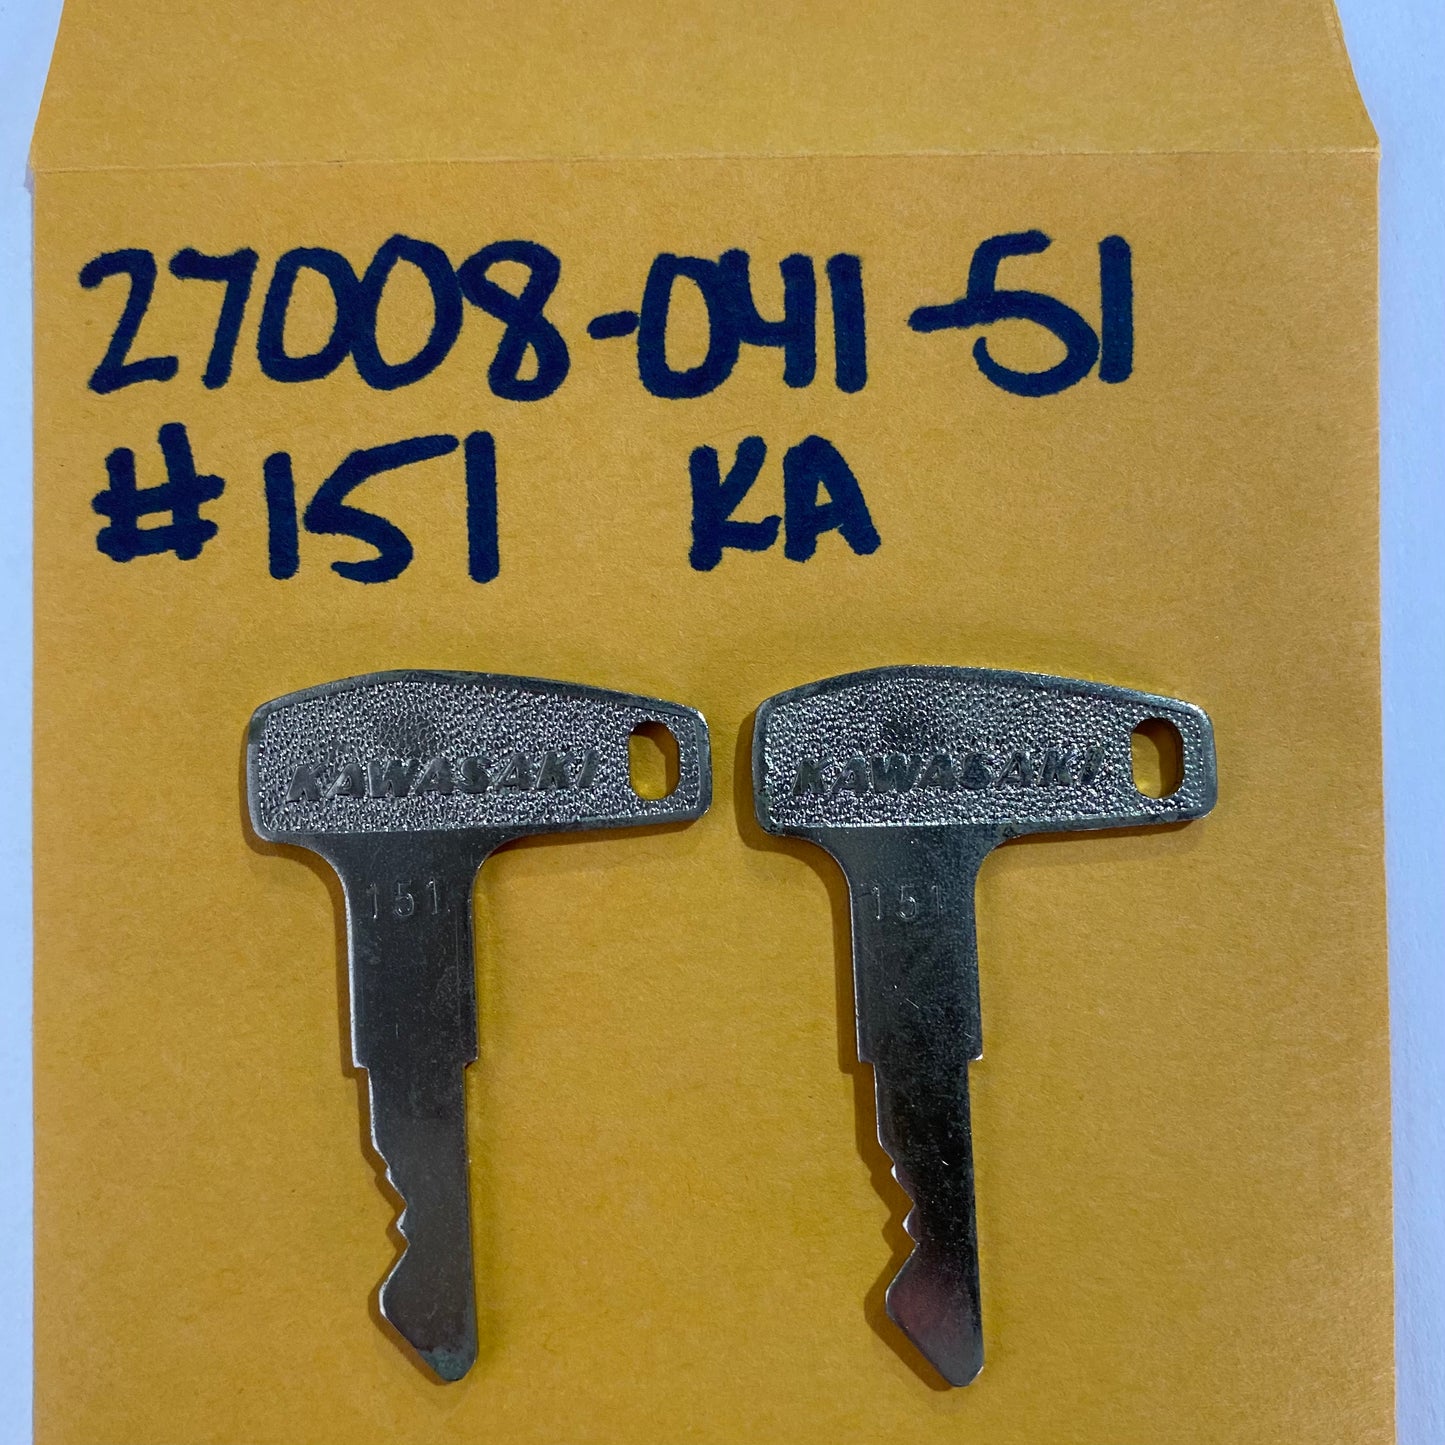 Kawasaki Key Set #151 27008-041-51 (set of 2)